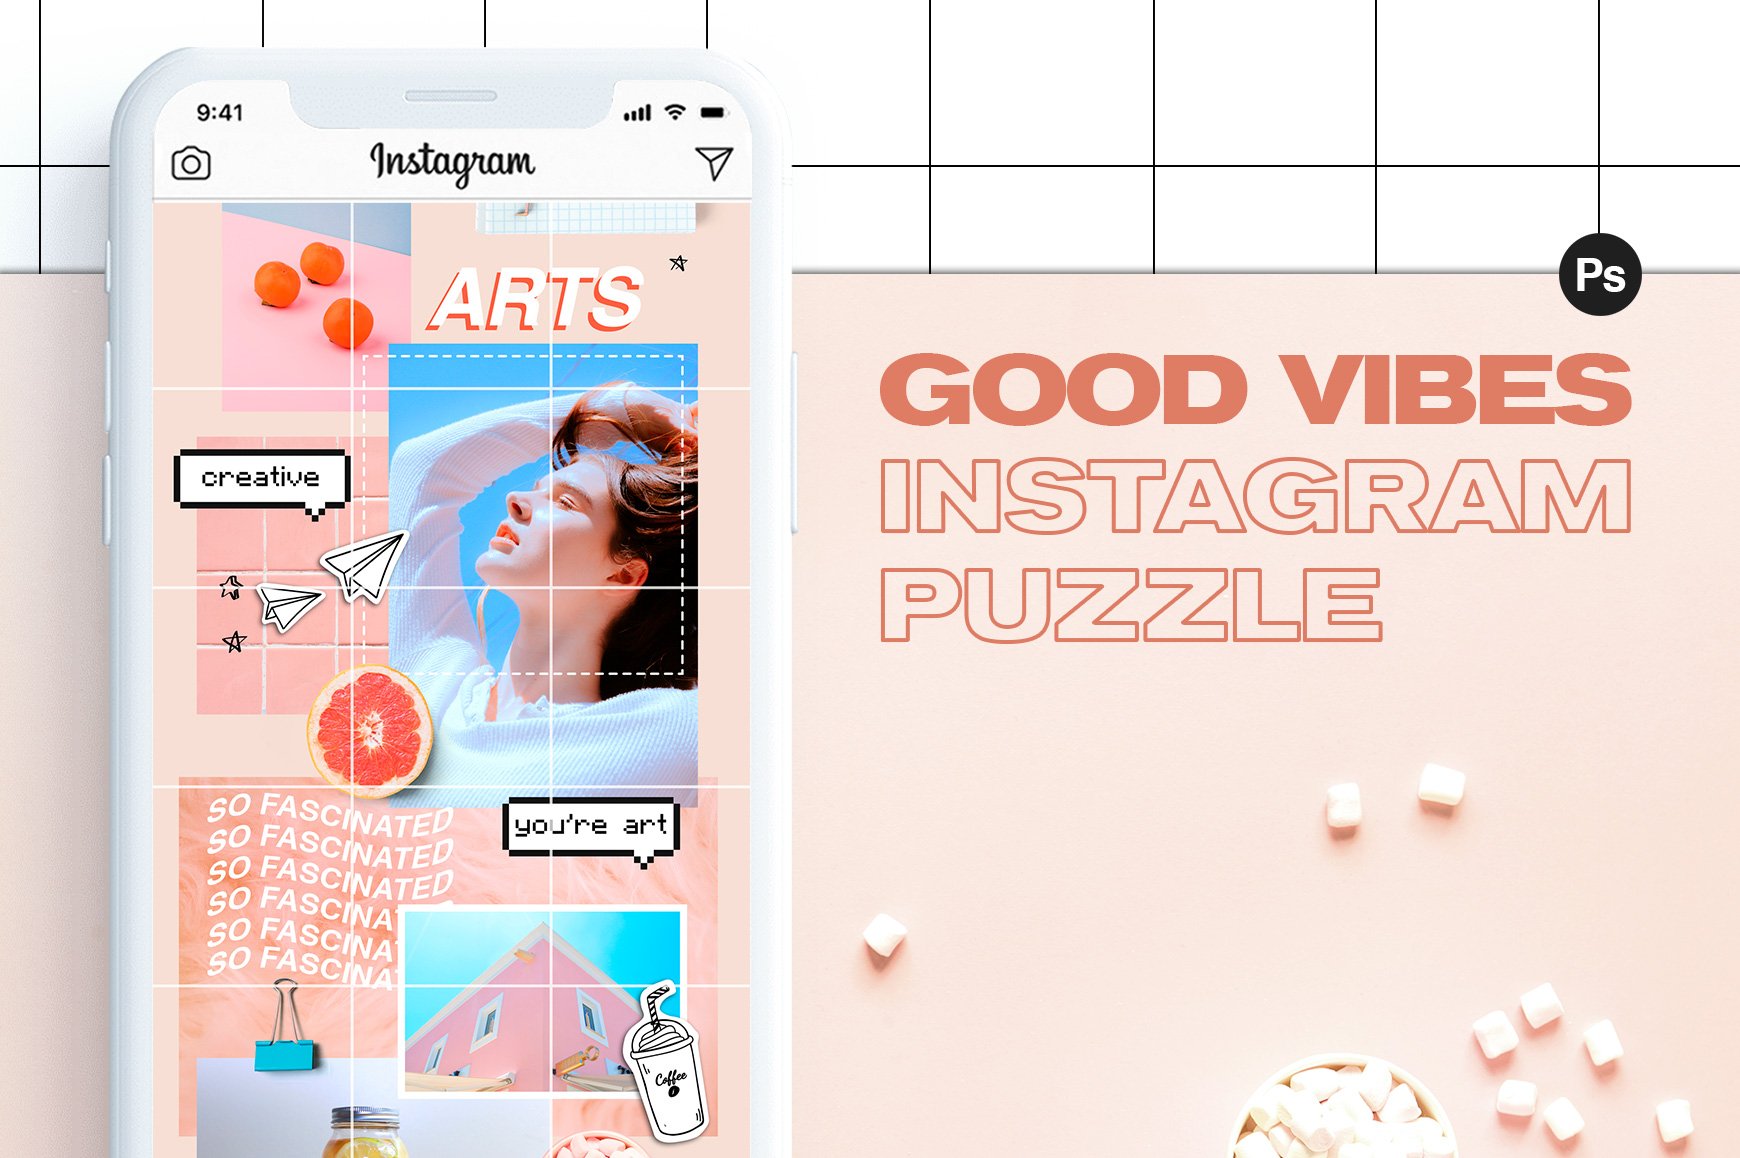 Instagram Puzzle - Good Vibes